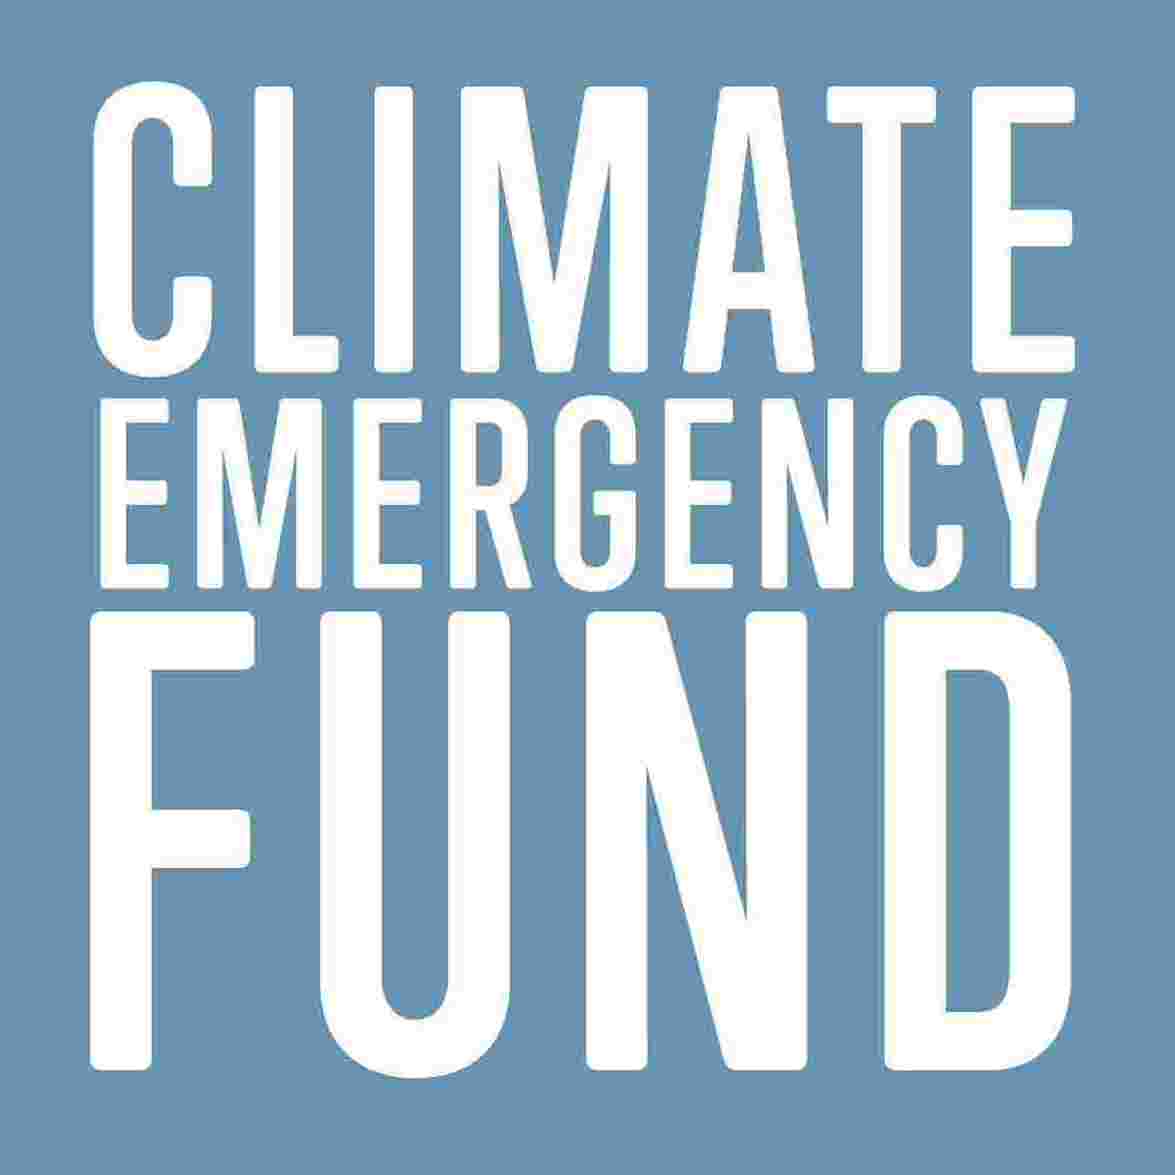 Climate Emergency Fund